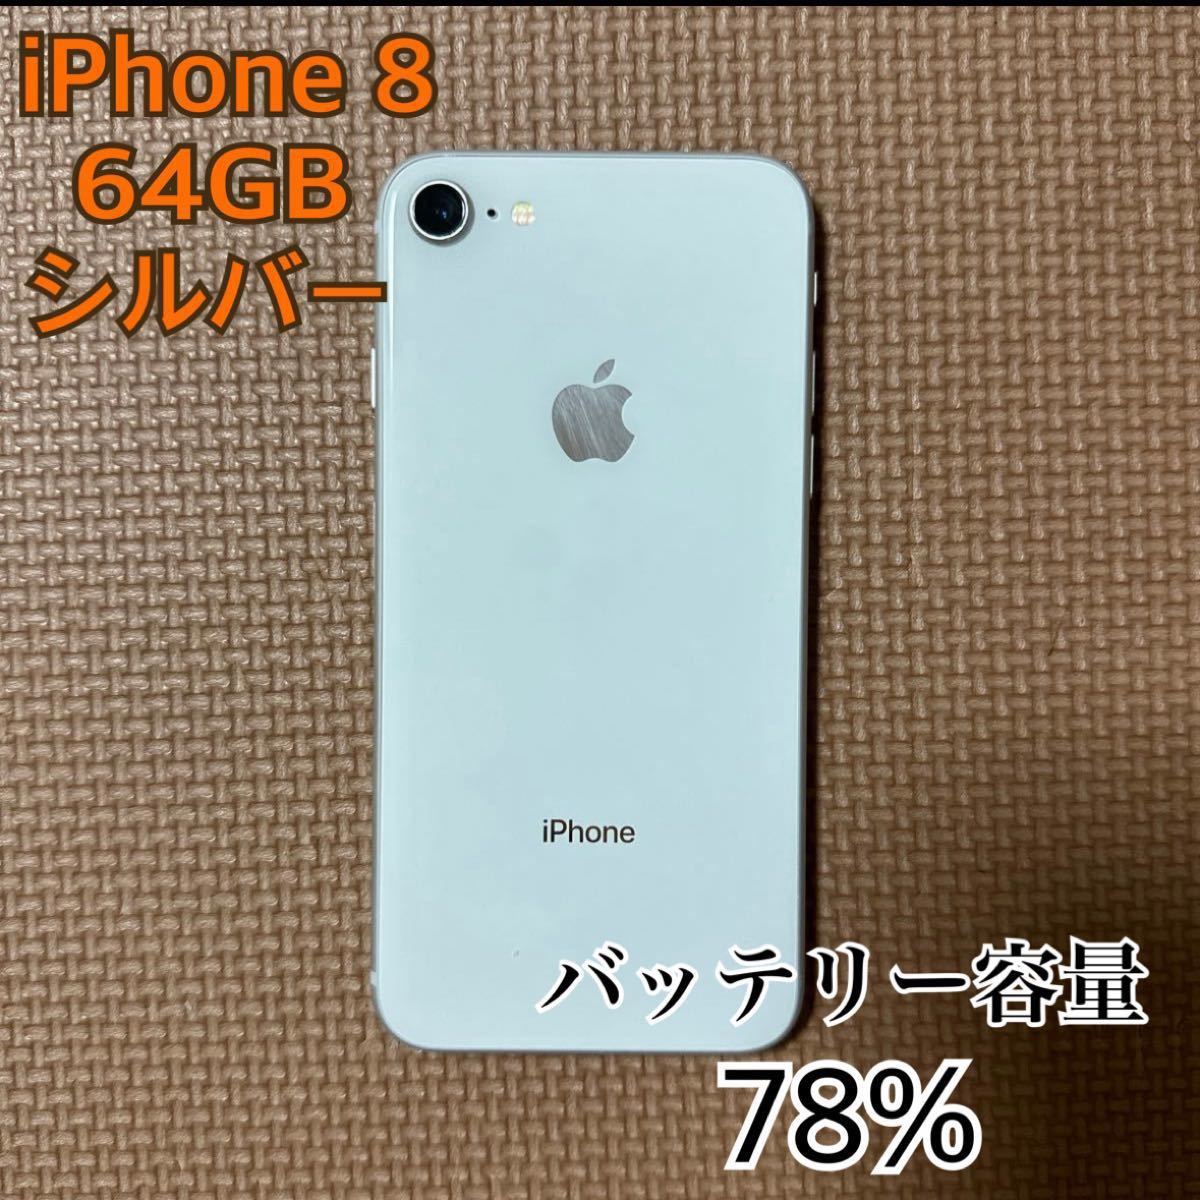 iPhone8 64GB Silver シルバー SoftBank | remark-exclusive.com